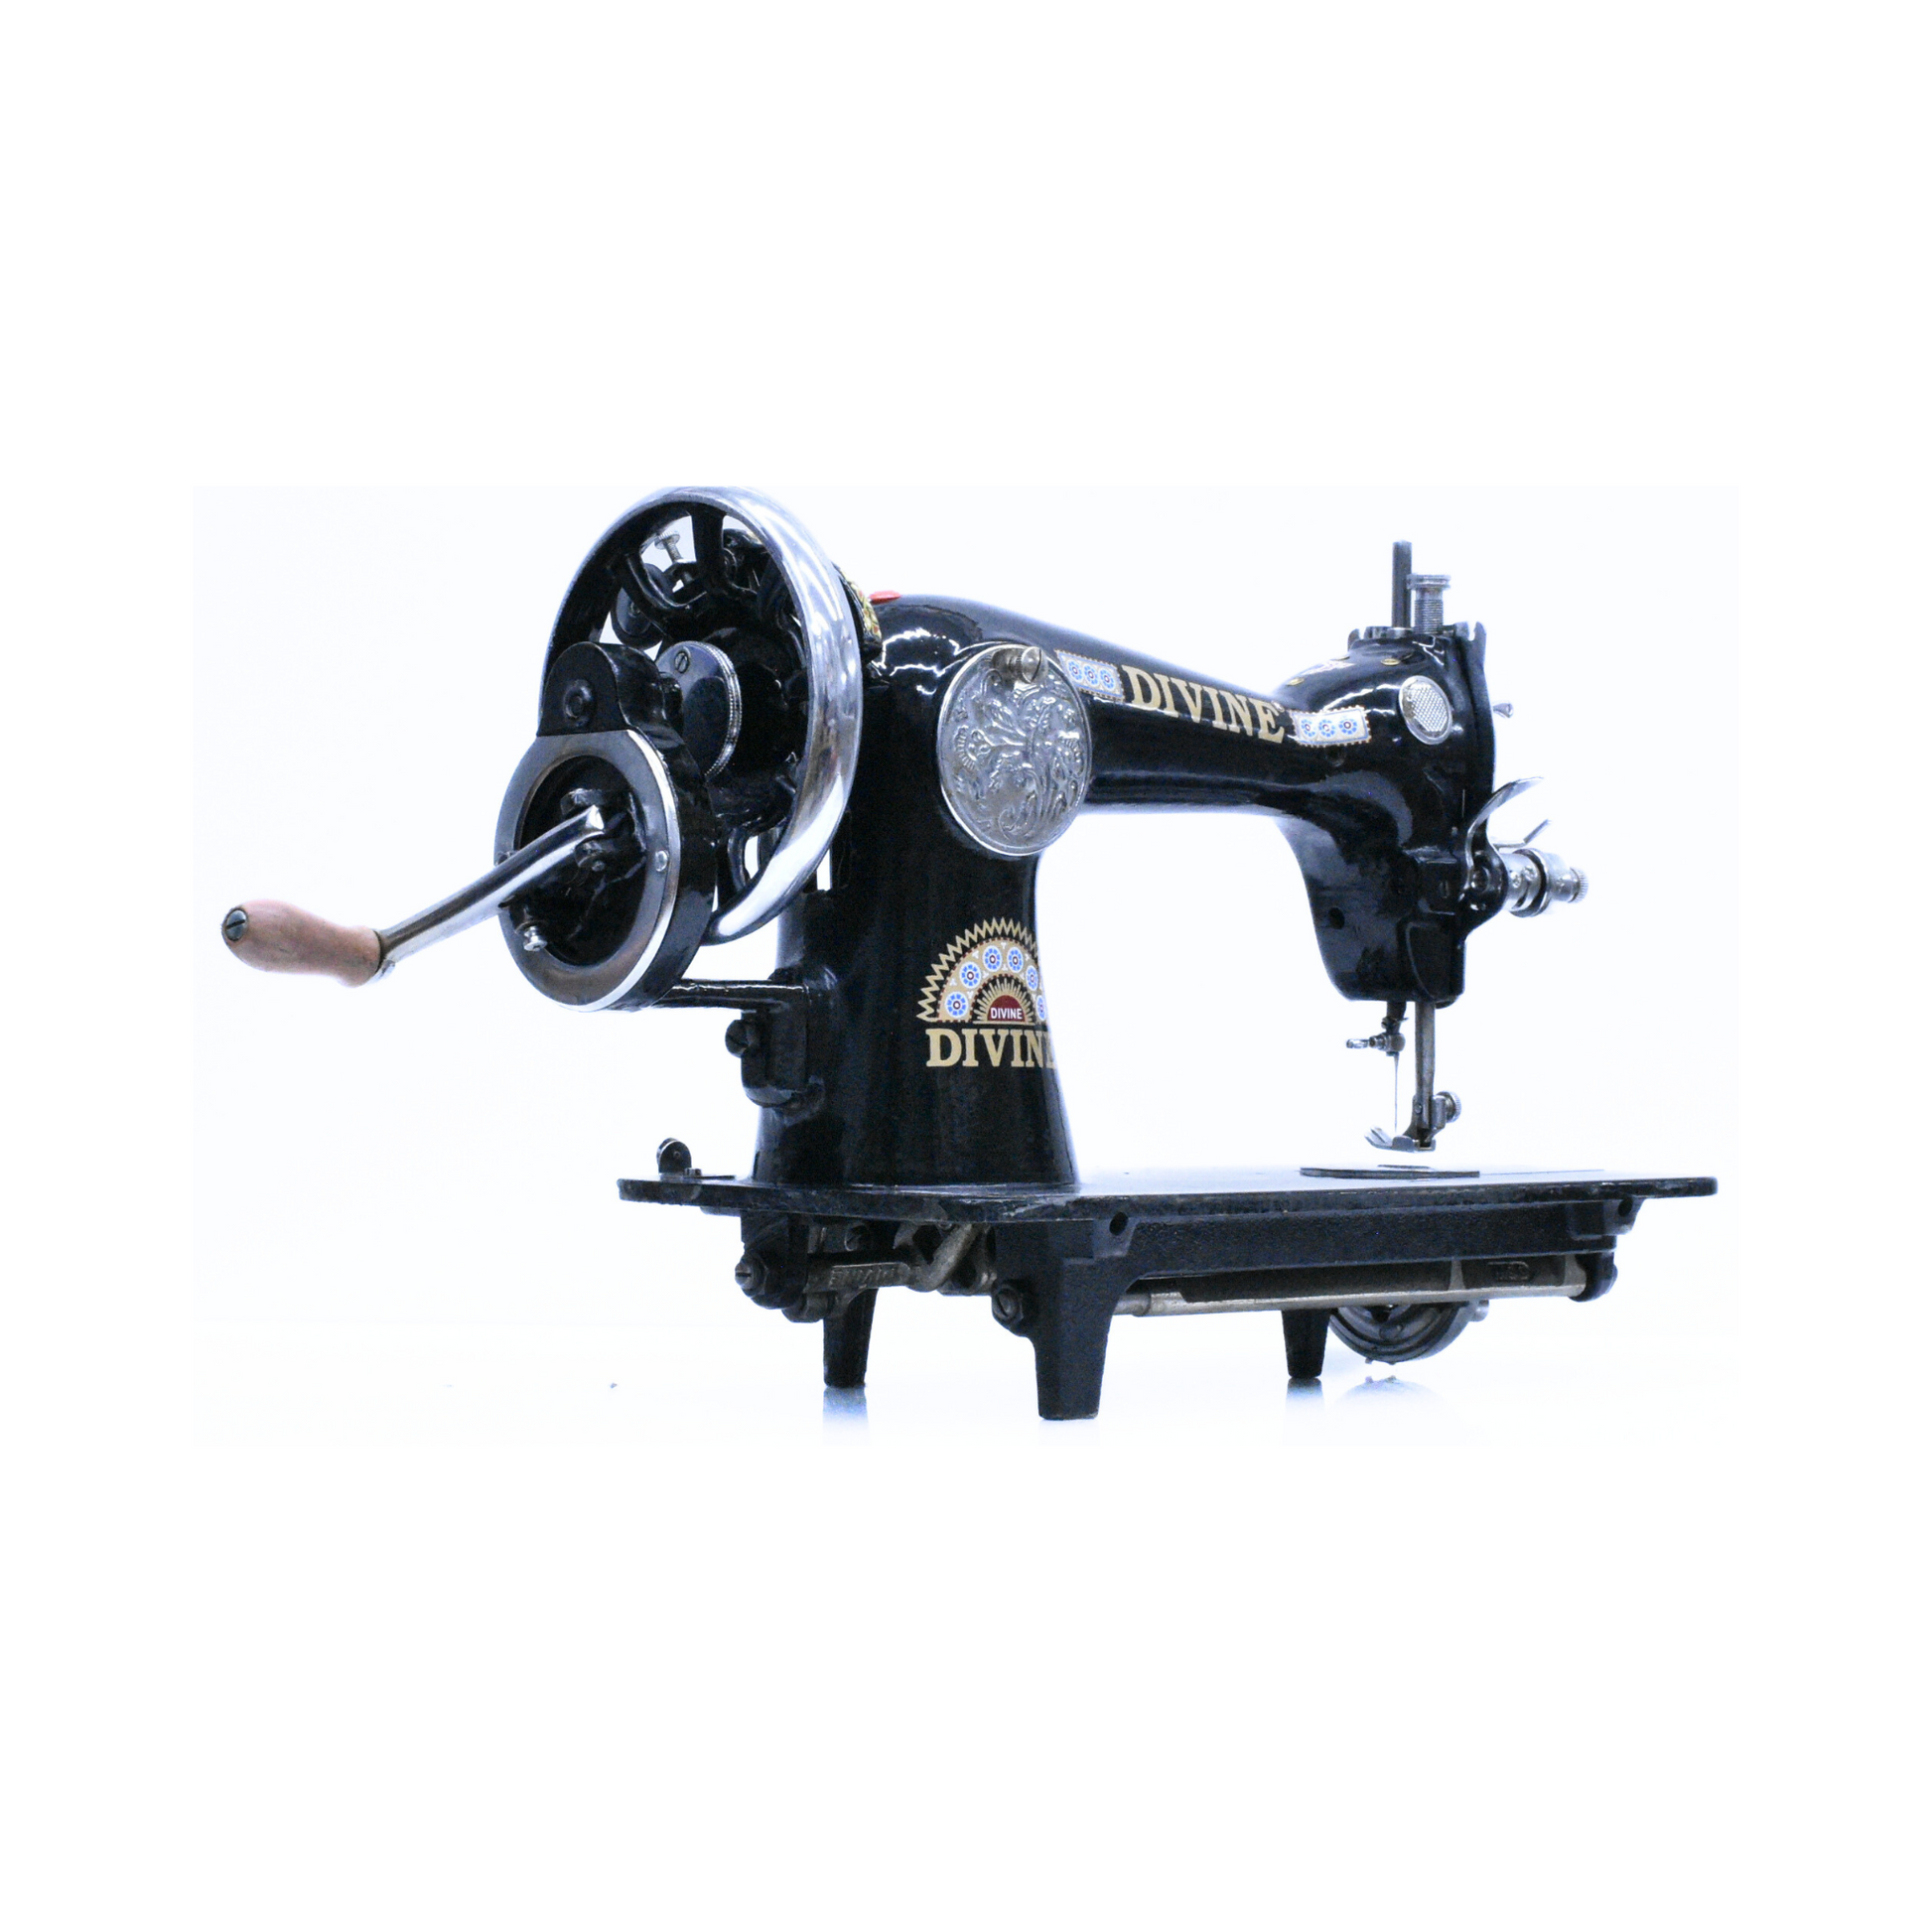 Divine - Vintage sewing machine - Black - Side view